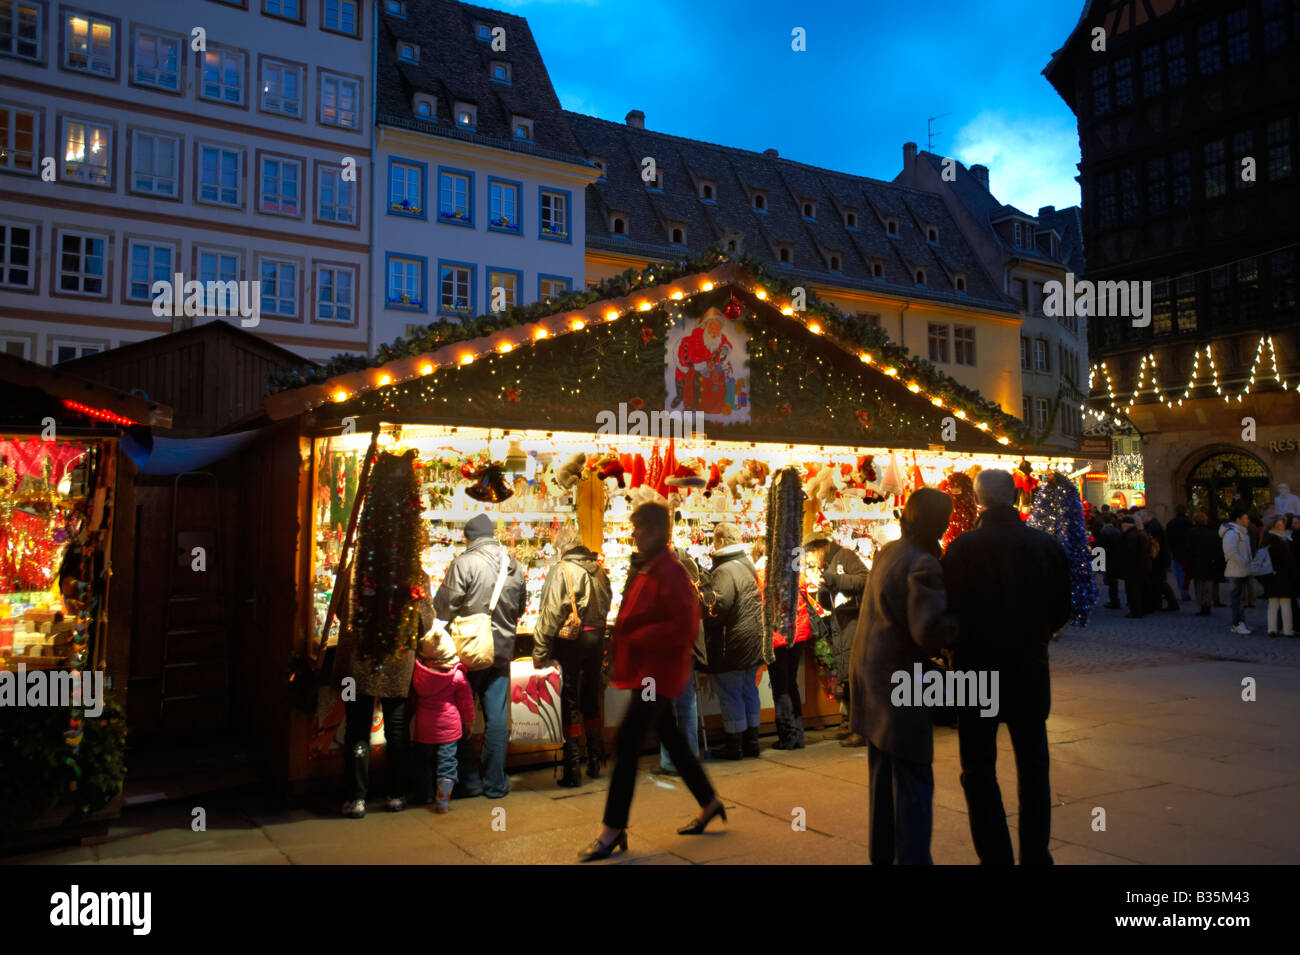 Christmas market at dusk - Strasbourg France Stock Photo